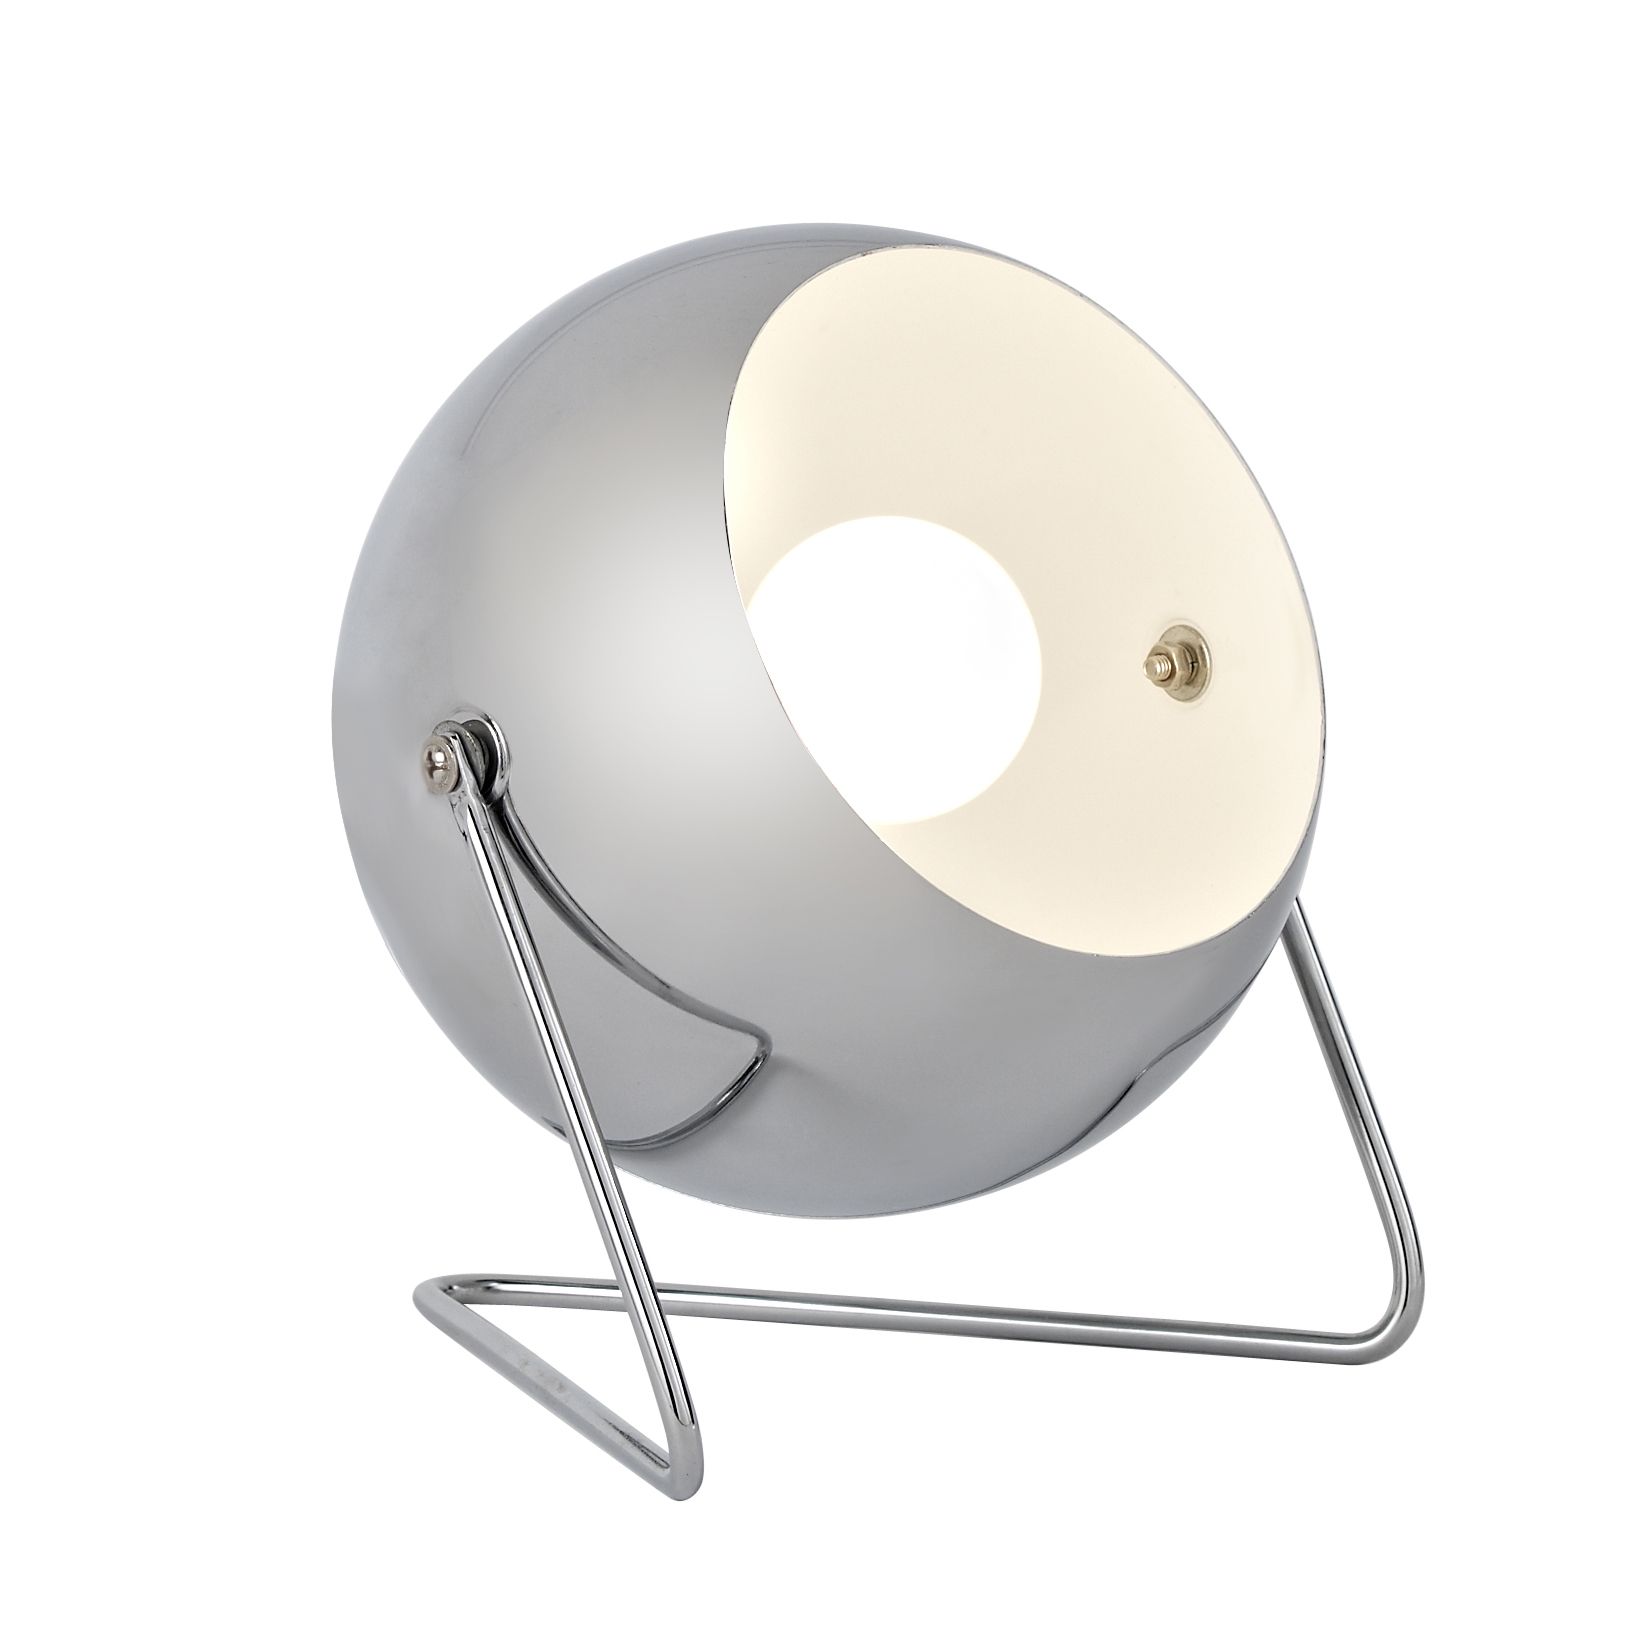 Bobo Chrome effect Incandescent Table lamp